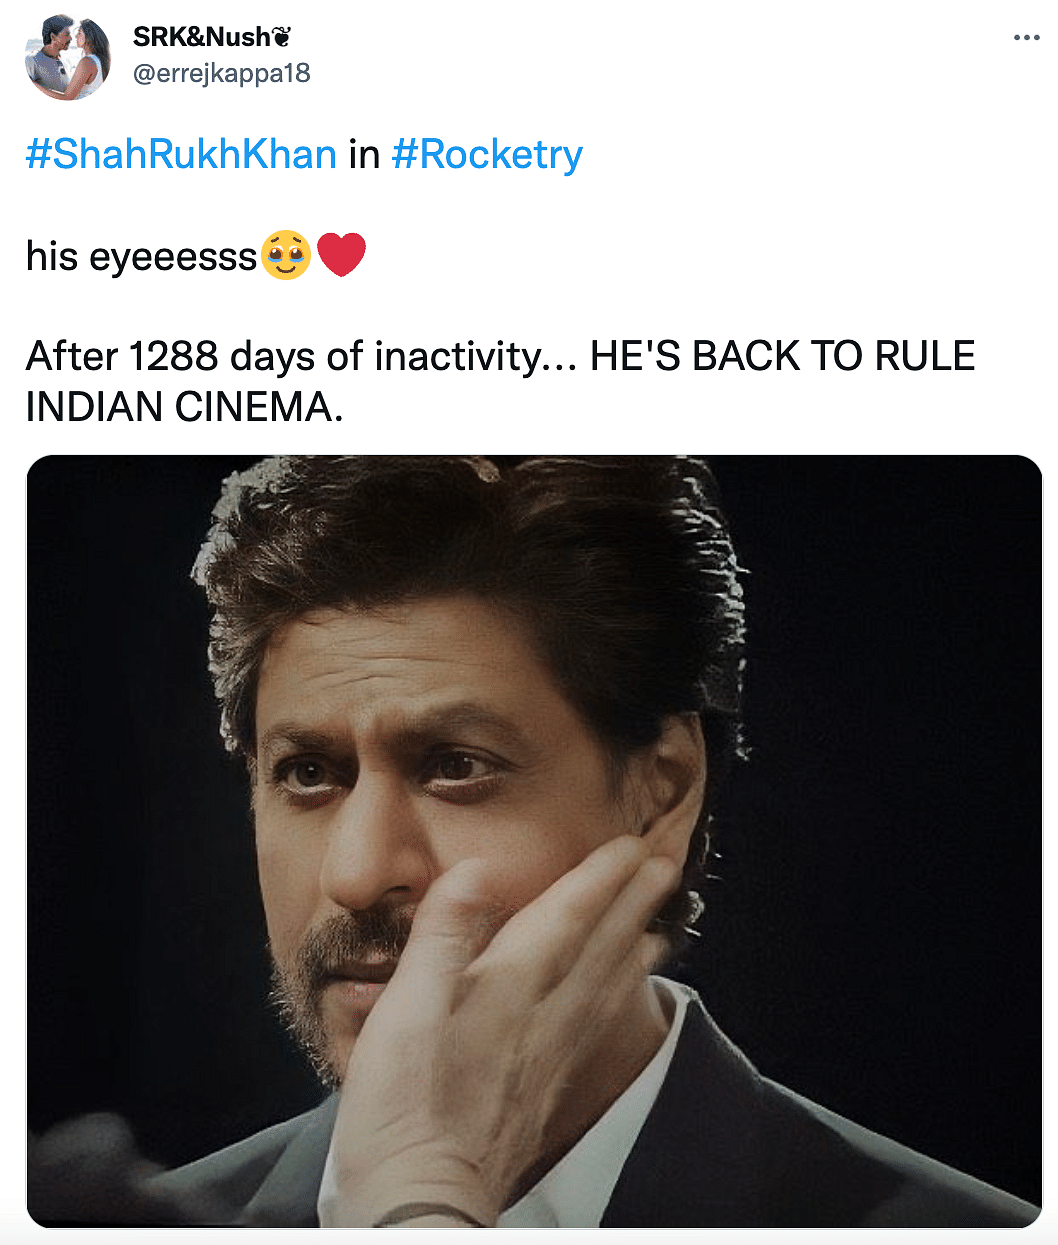 Shah Rukh Khan was last seen in Aanand L Rai's 'Zero'.